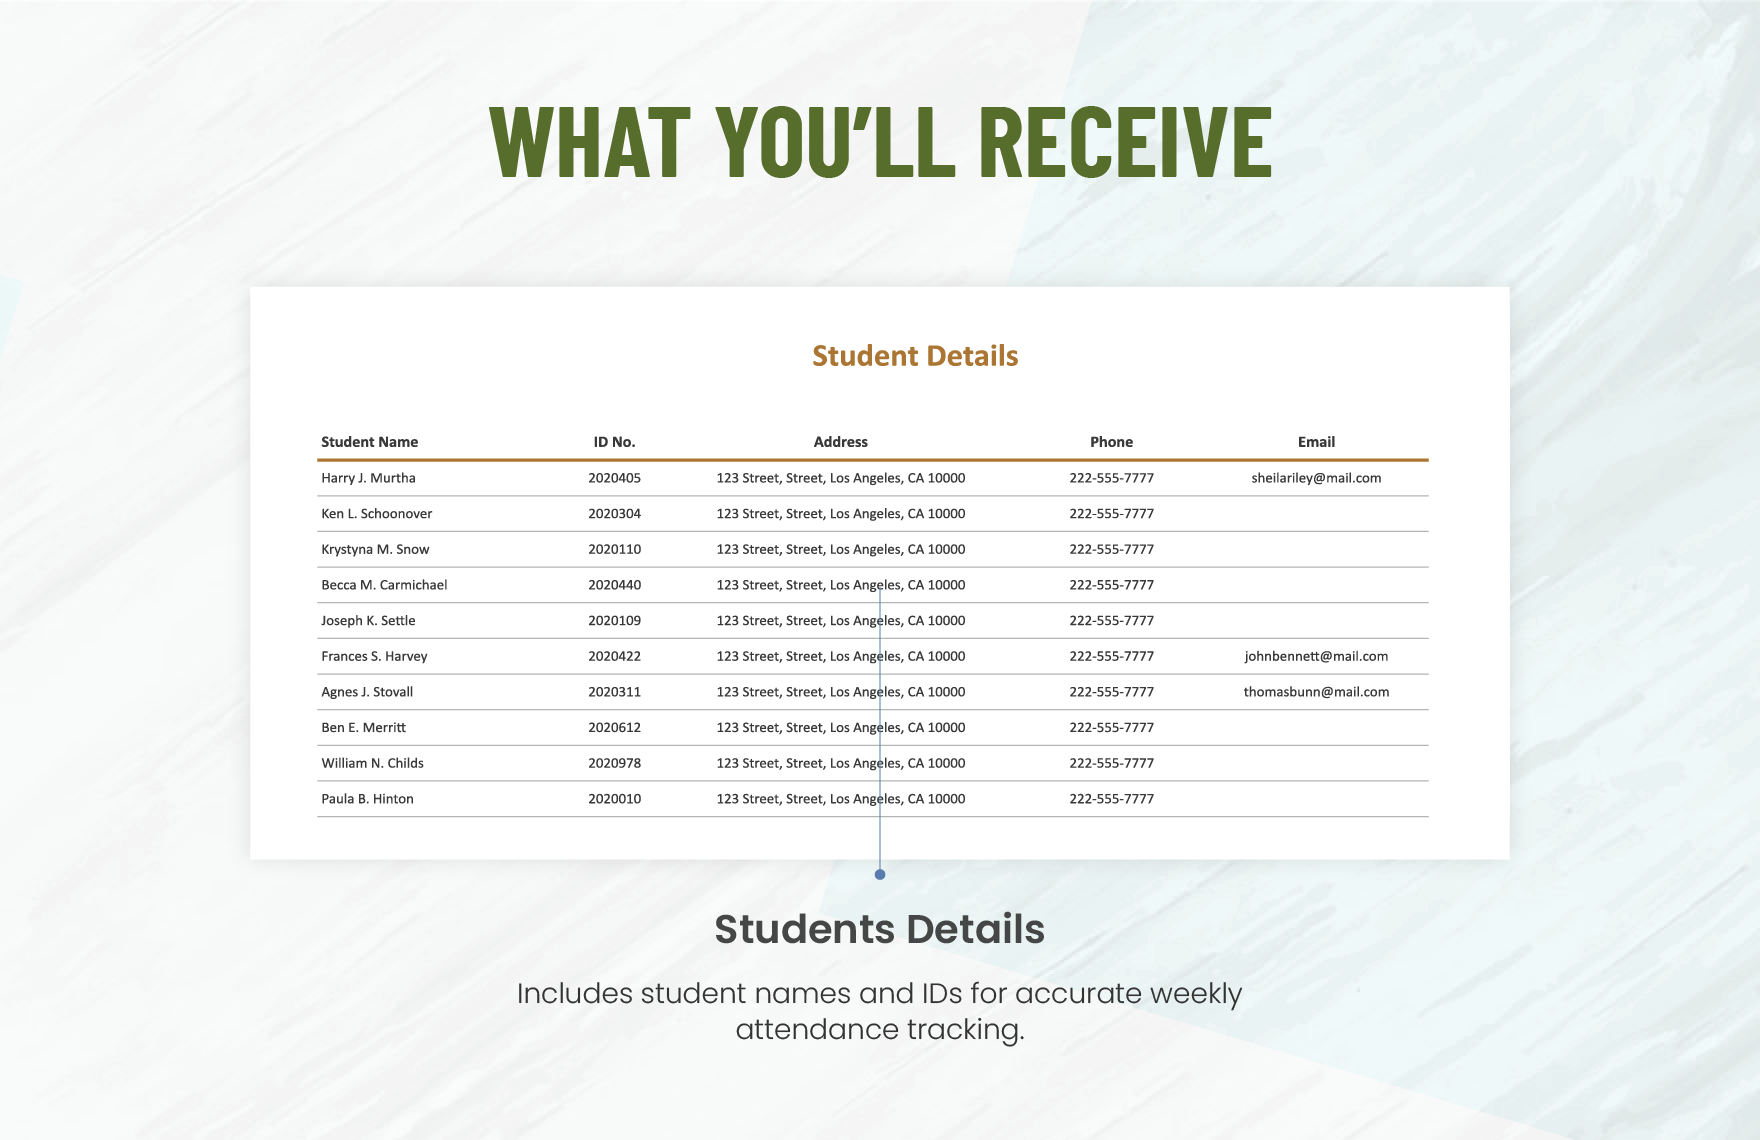 University Weekly Attendance Sheet Template